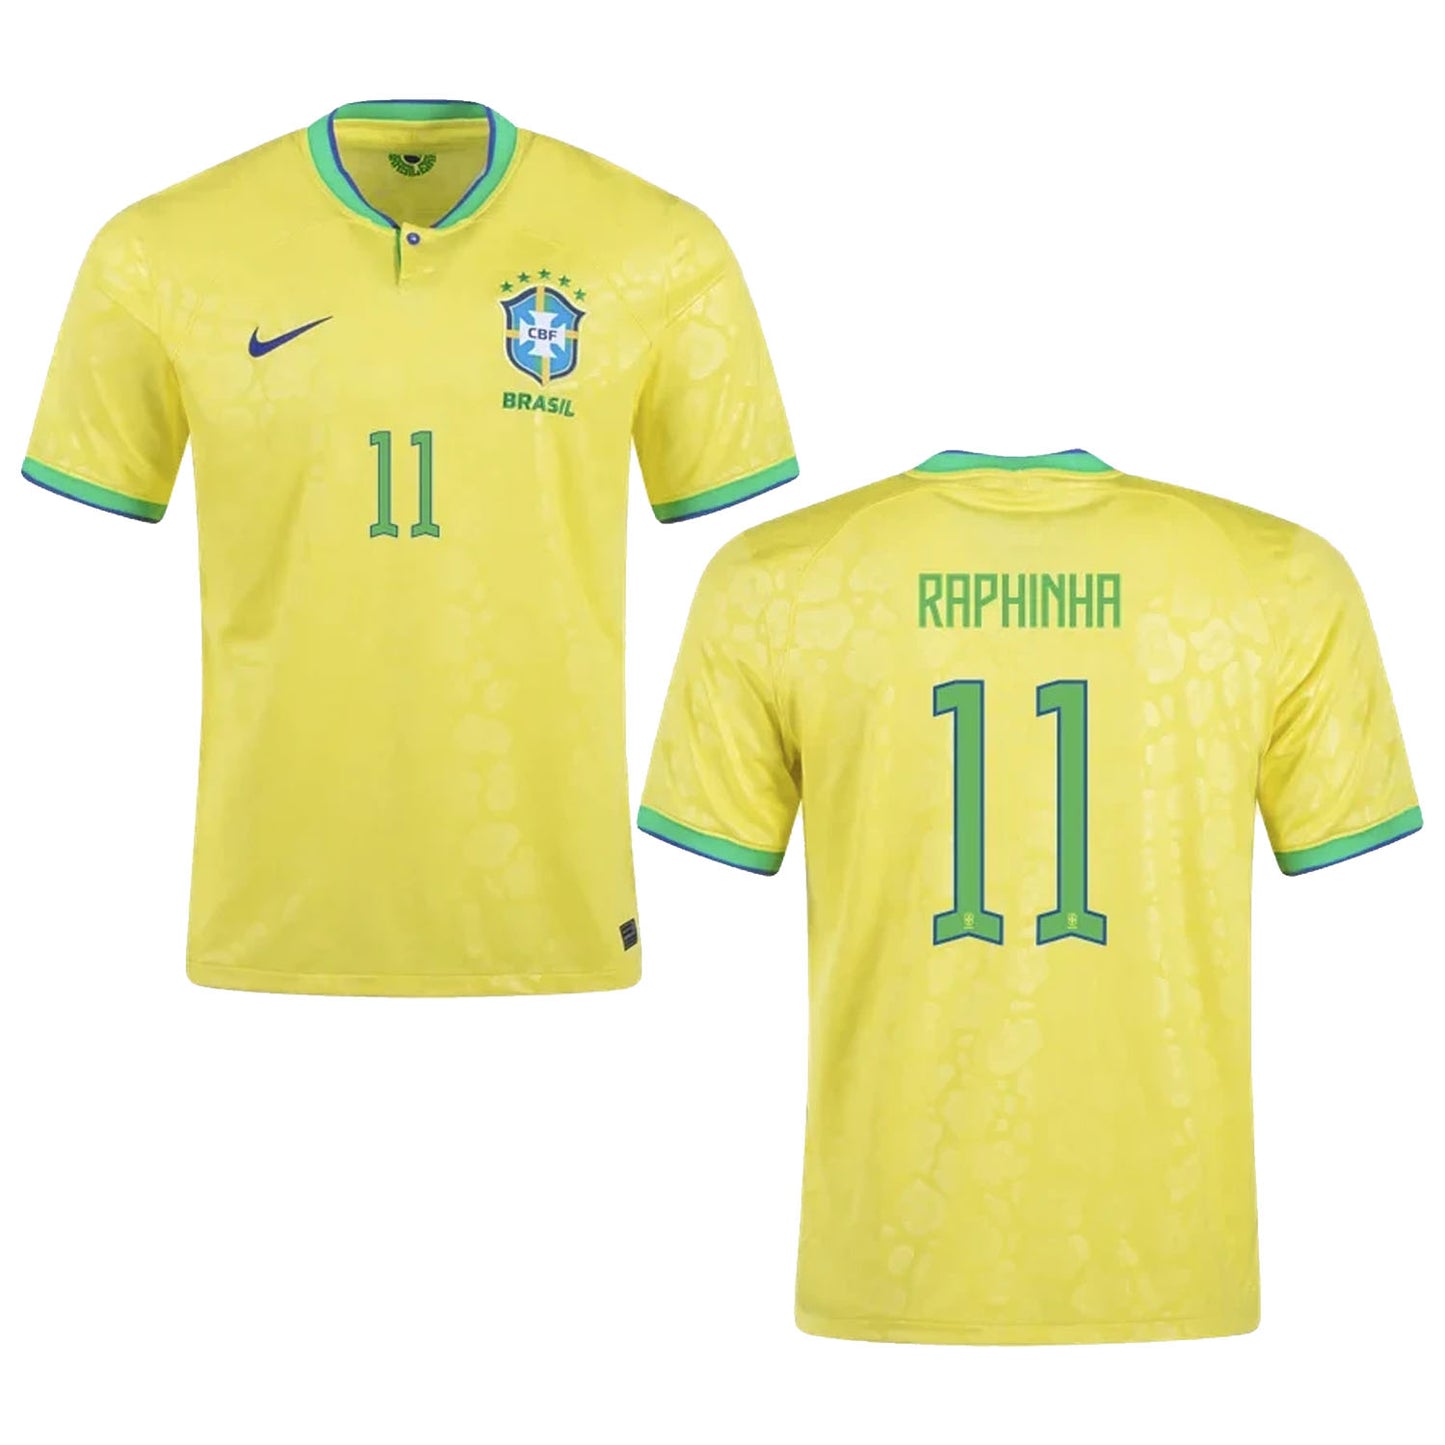 Raphinha Brazil 11 FIFA World Cup Jersey